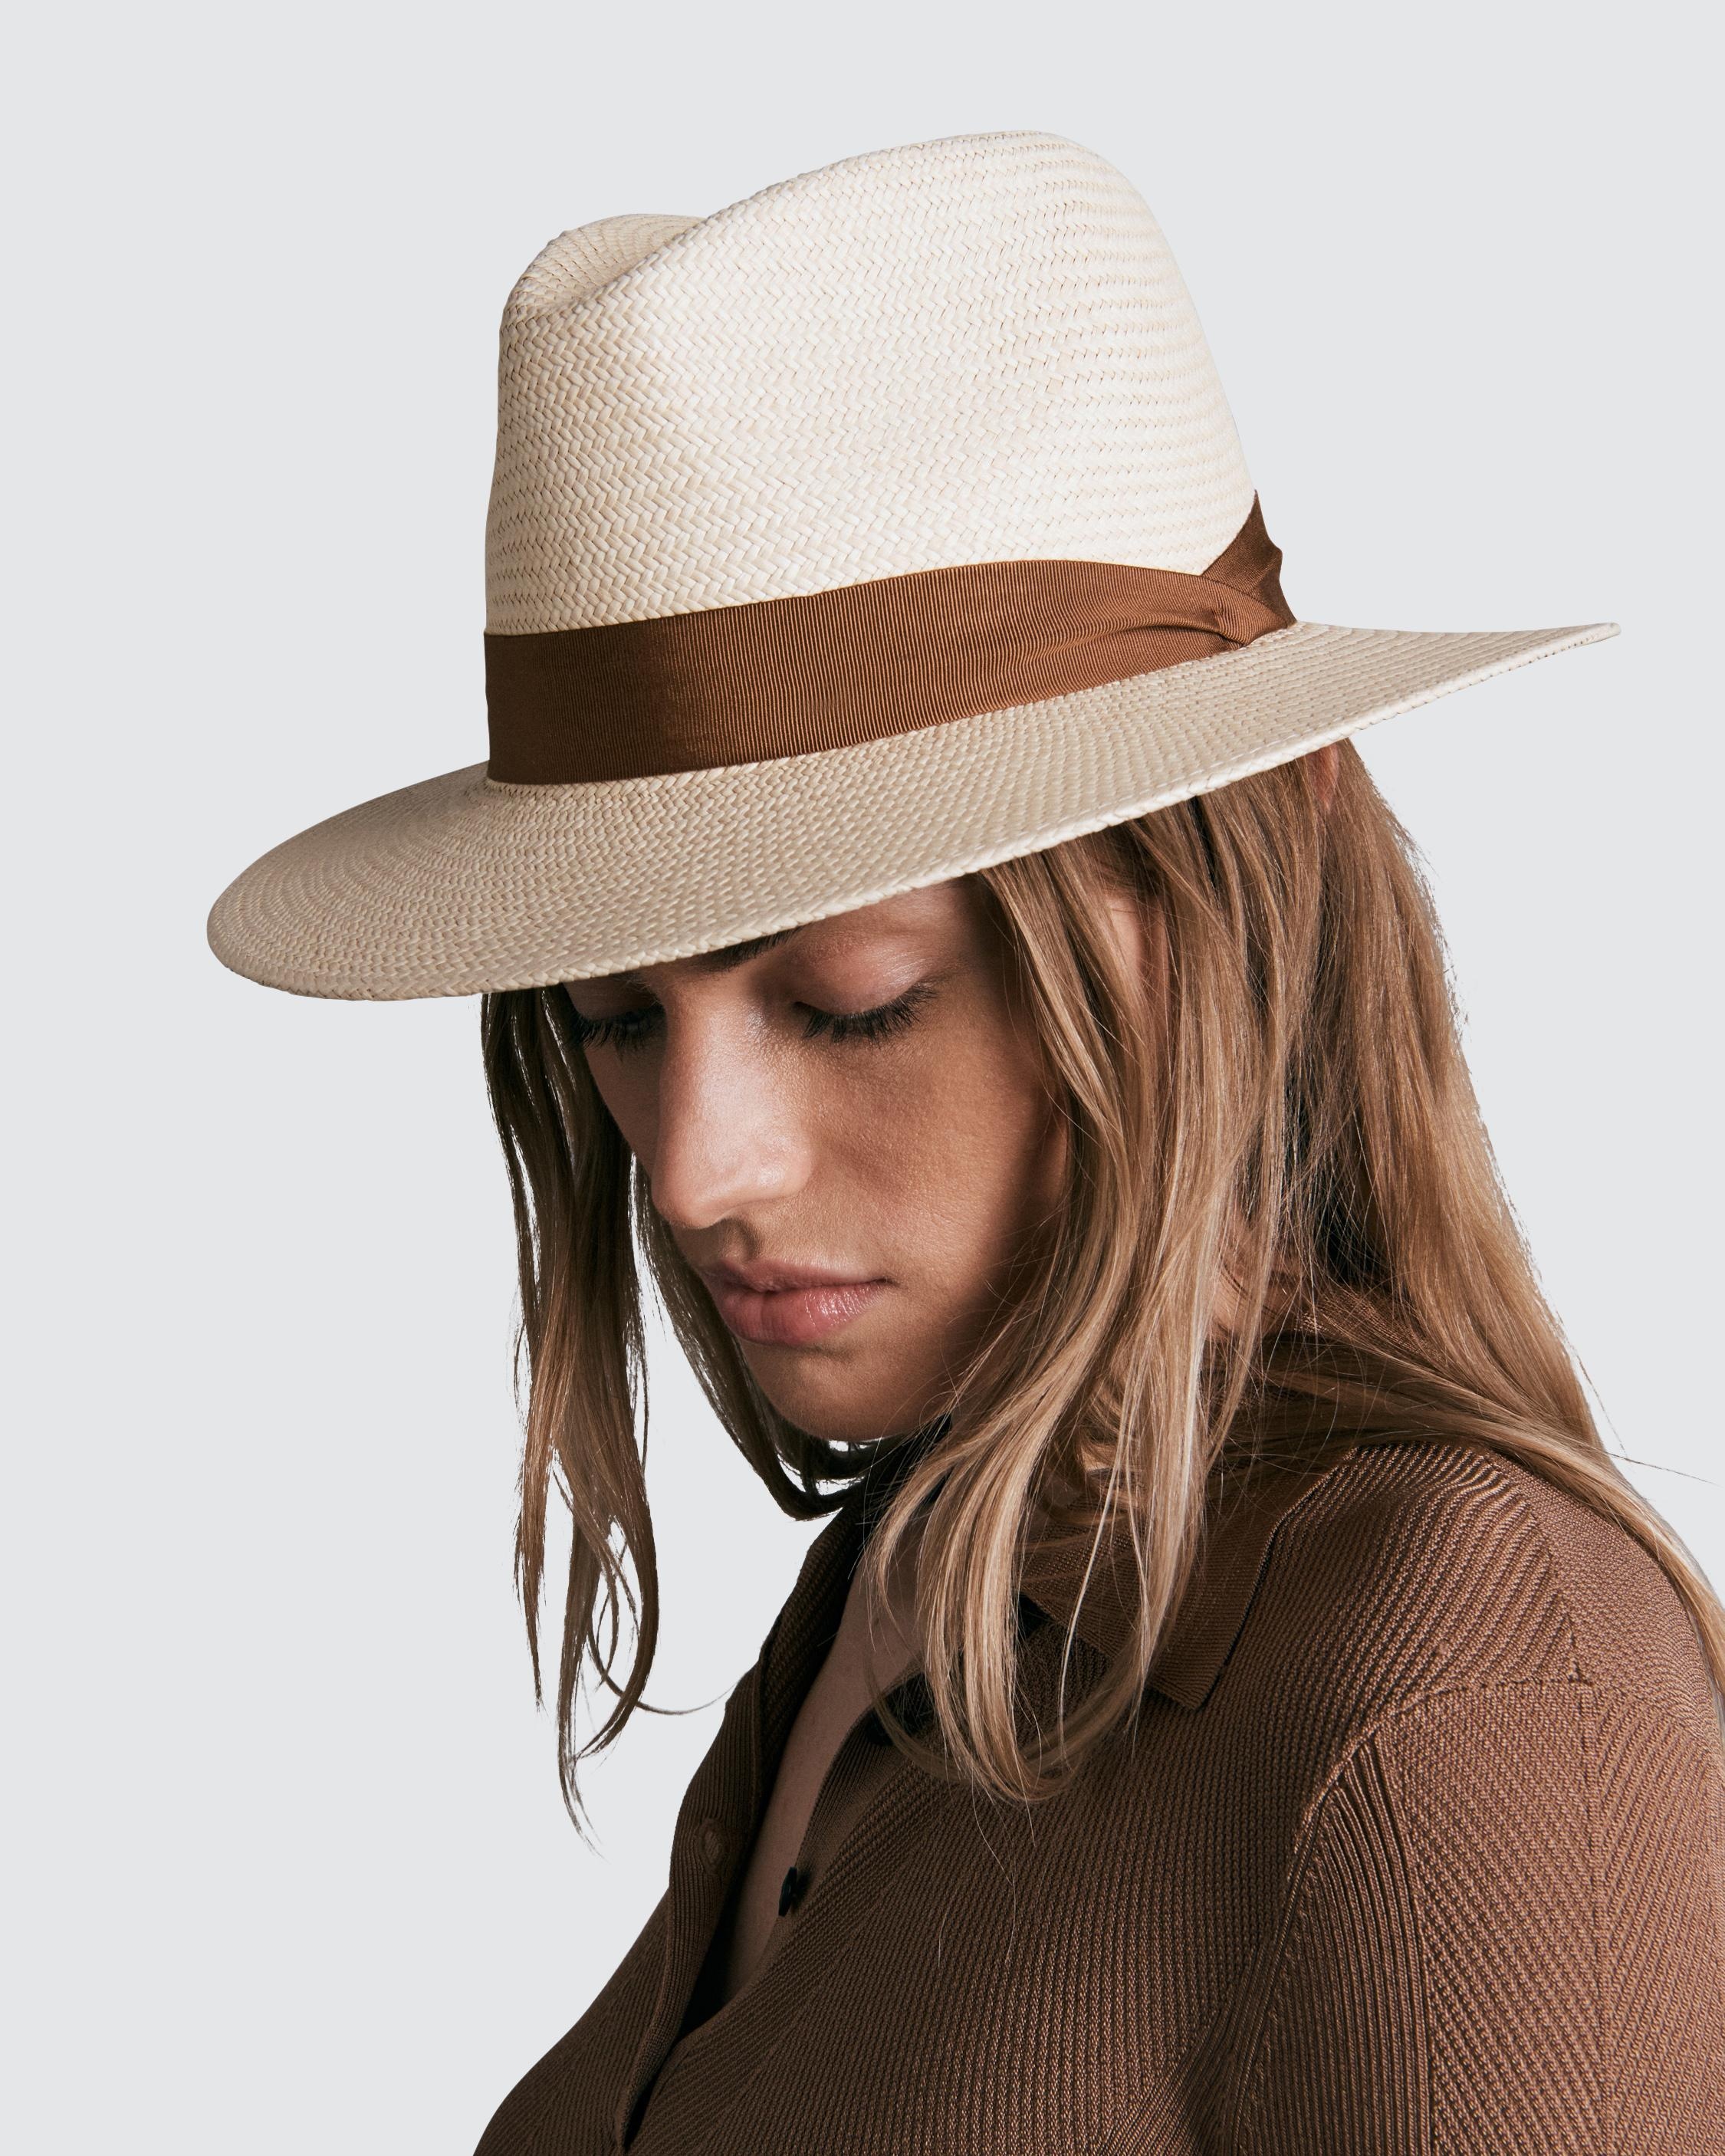 Panama Hat
Straw Hat - 2